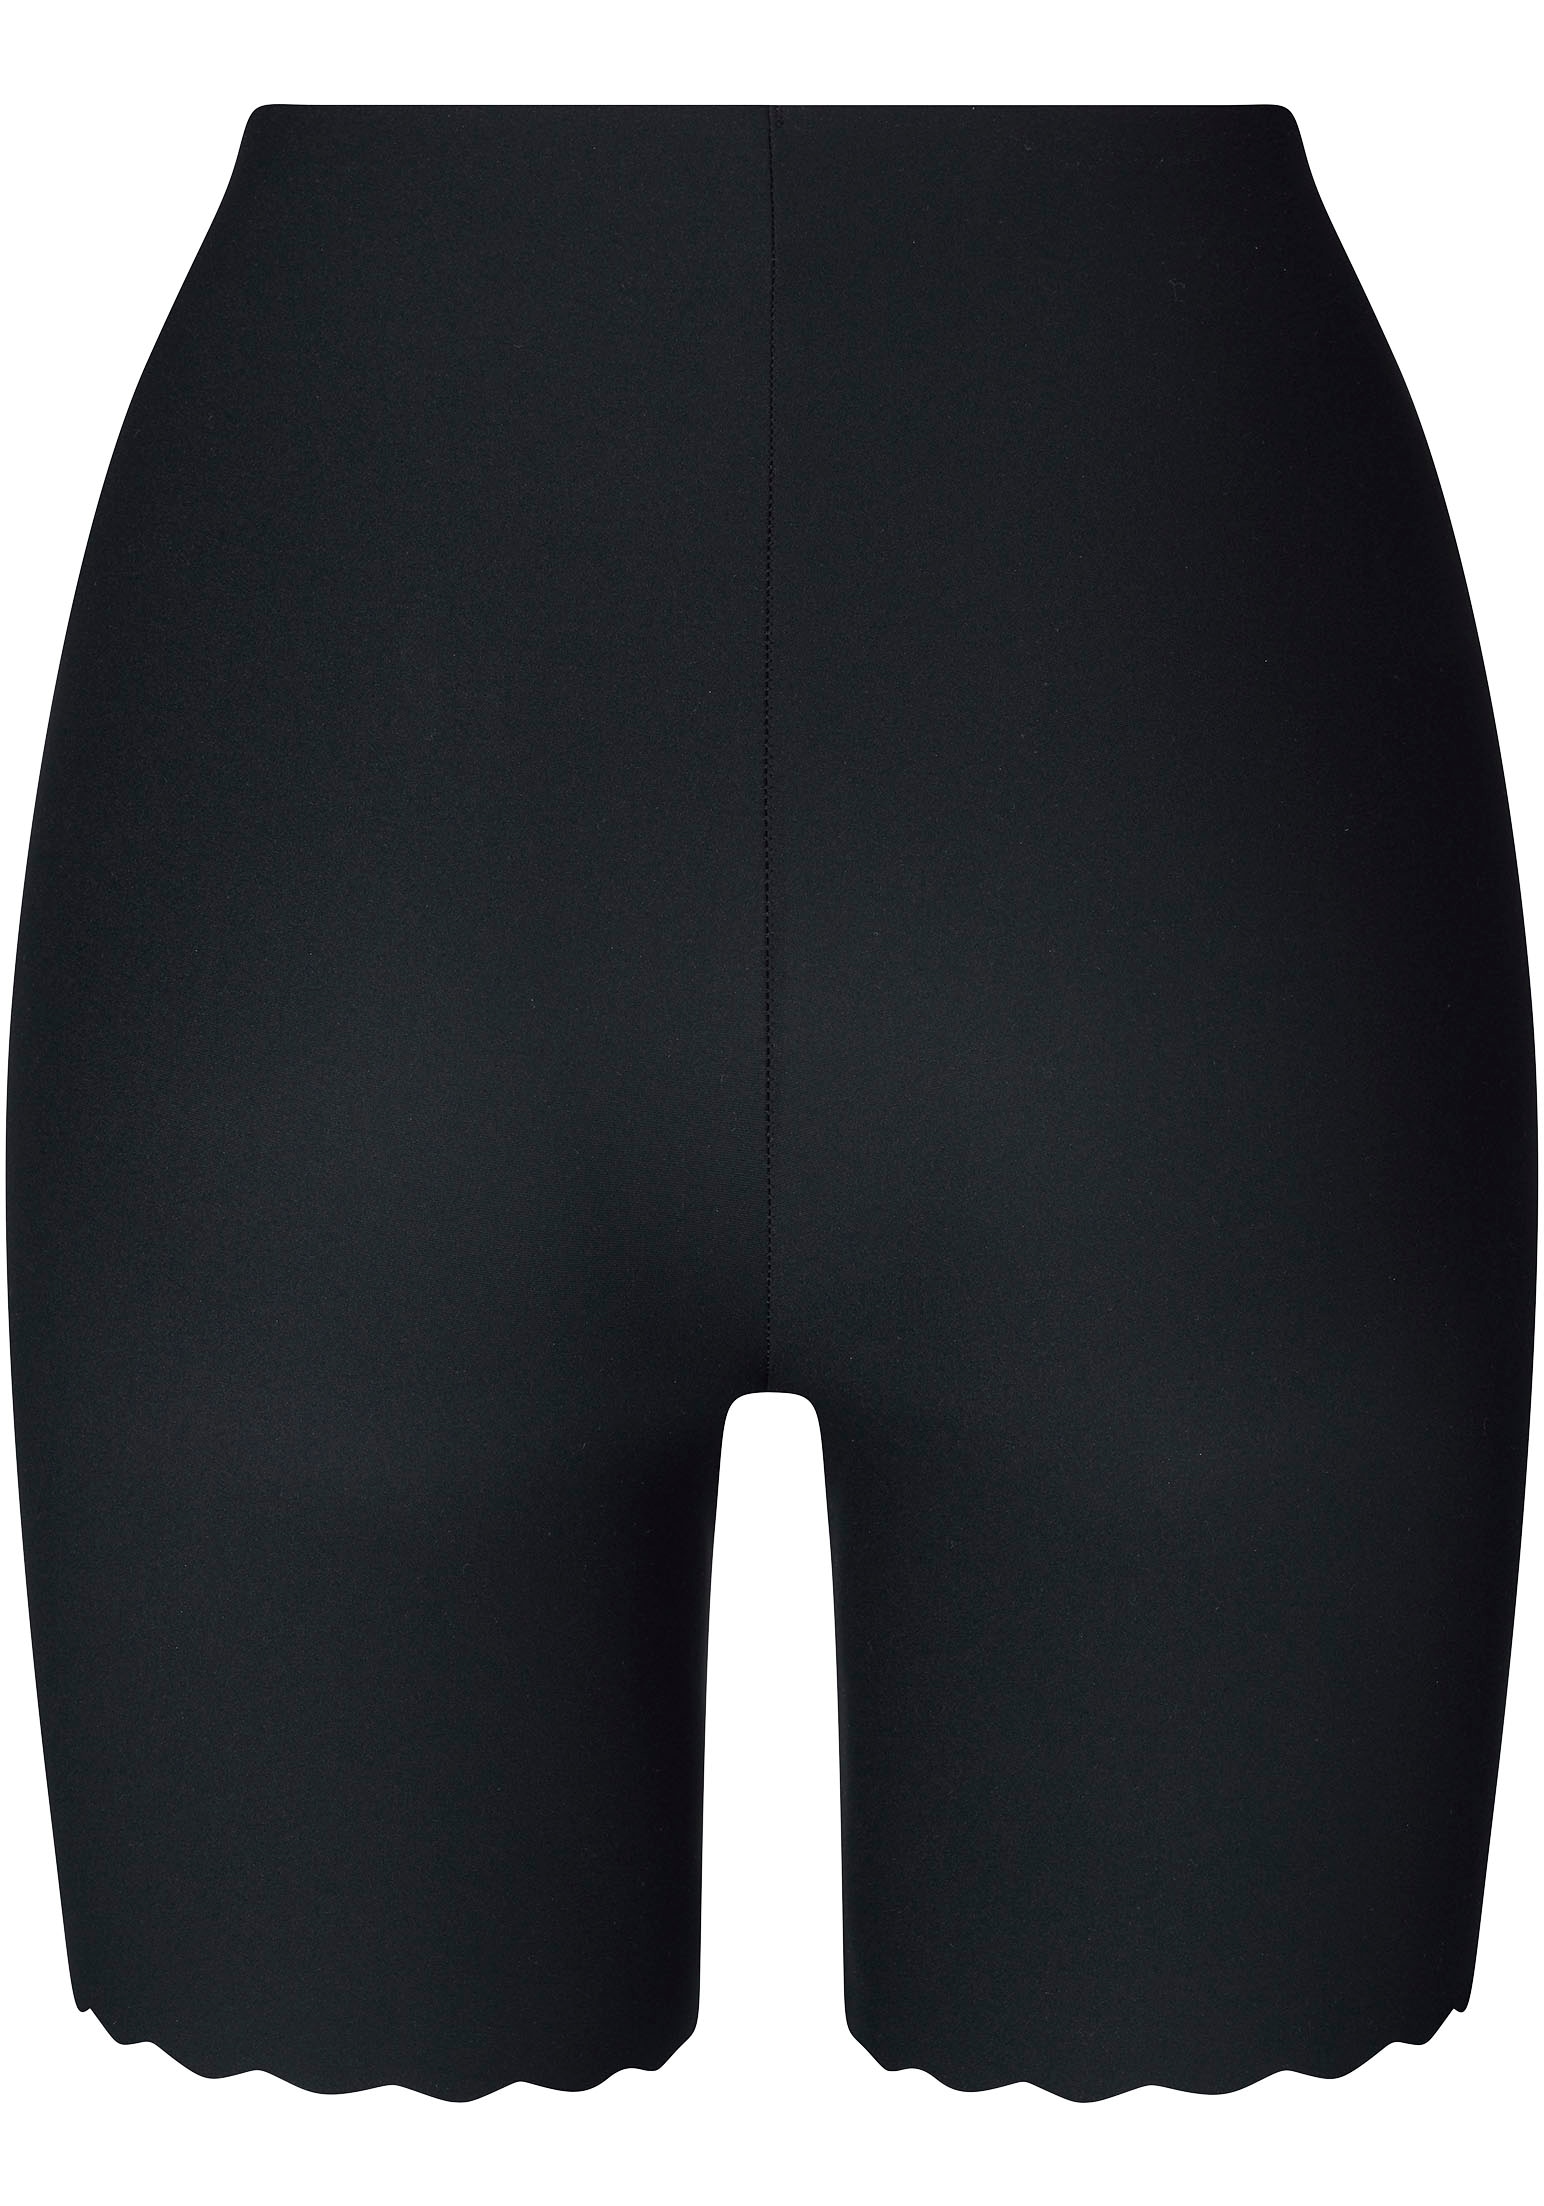 Skiny Lange Unterhose »Micro Essentials«, Short Pants